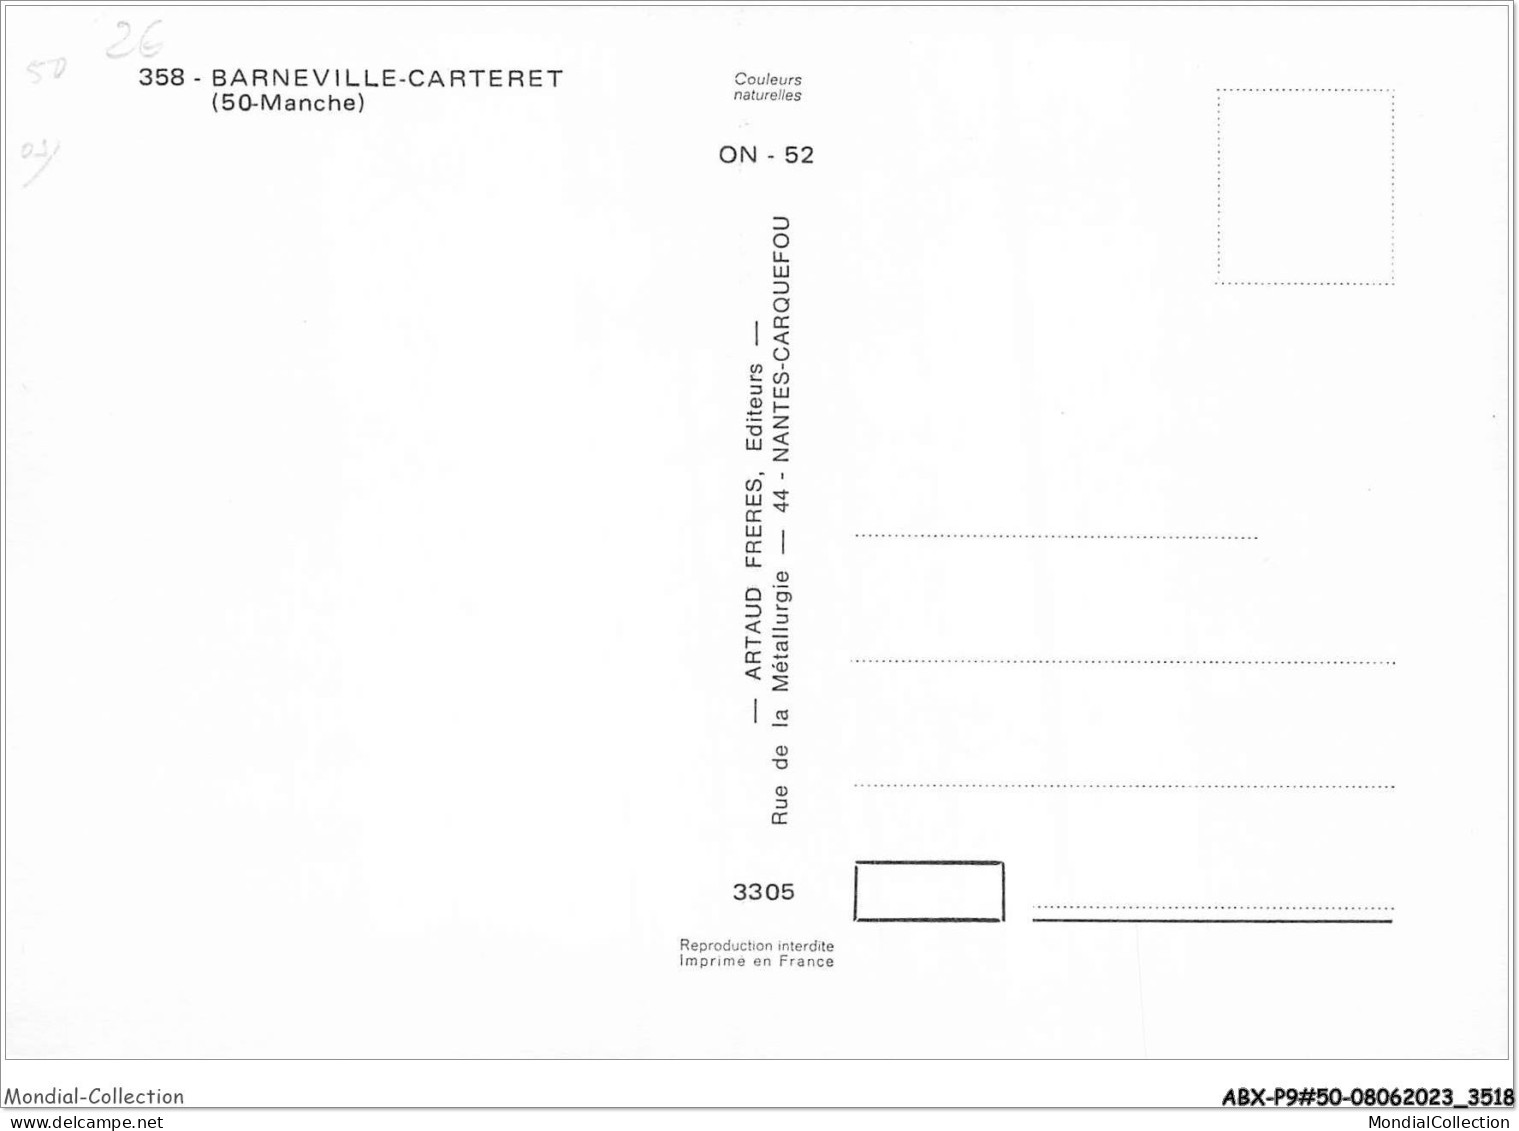 ABXP9-50-0752 - CARTERET - BARNEVILLE - Carteret